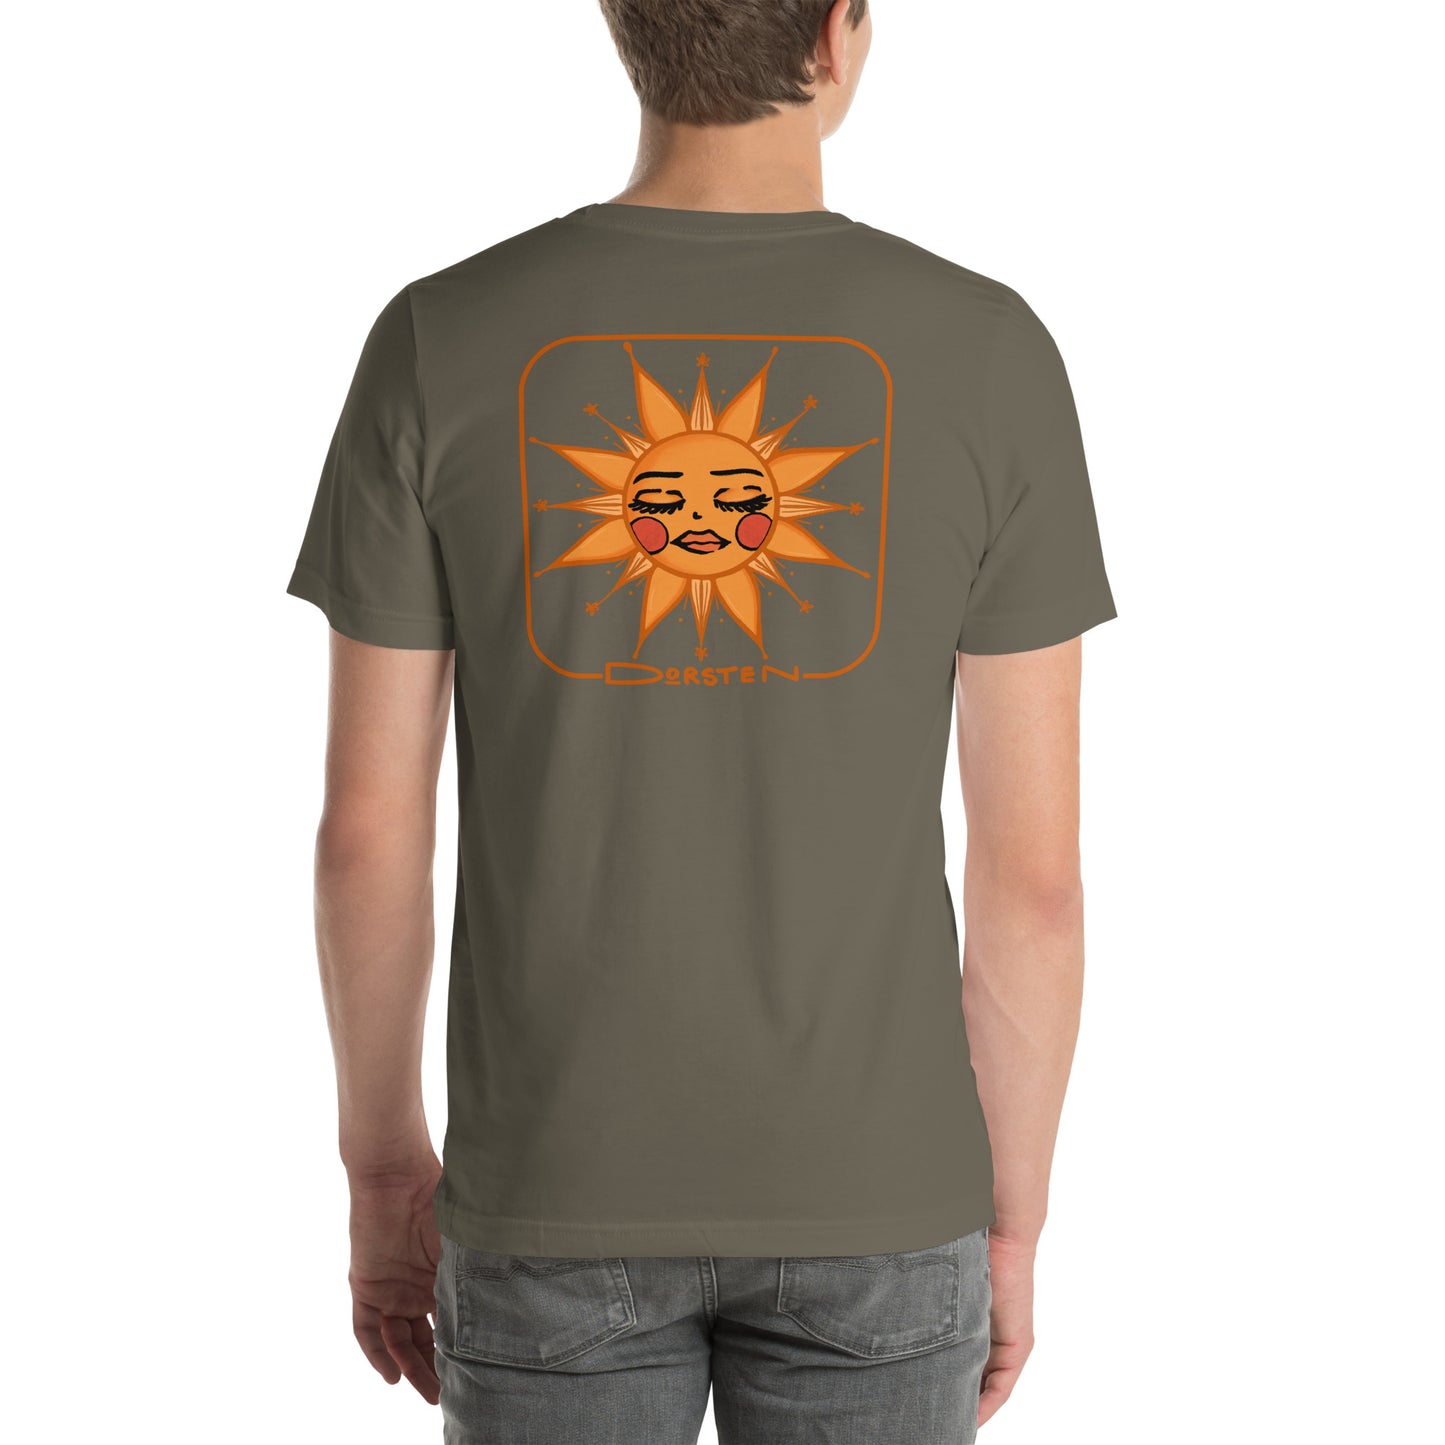 DORSTEN Sun T-shirt